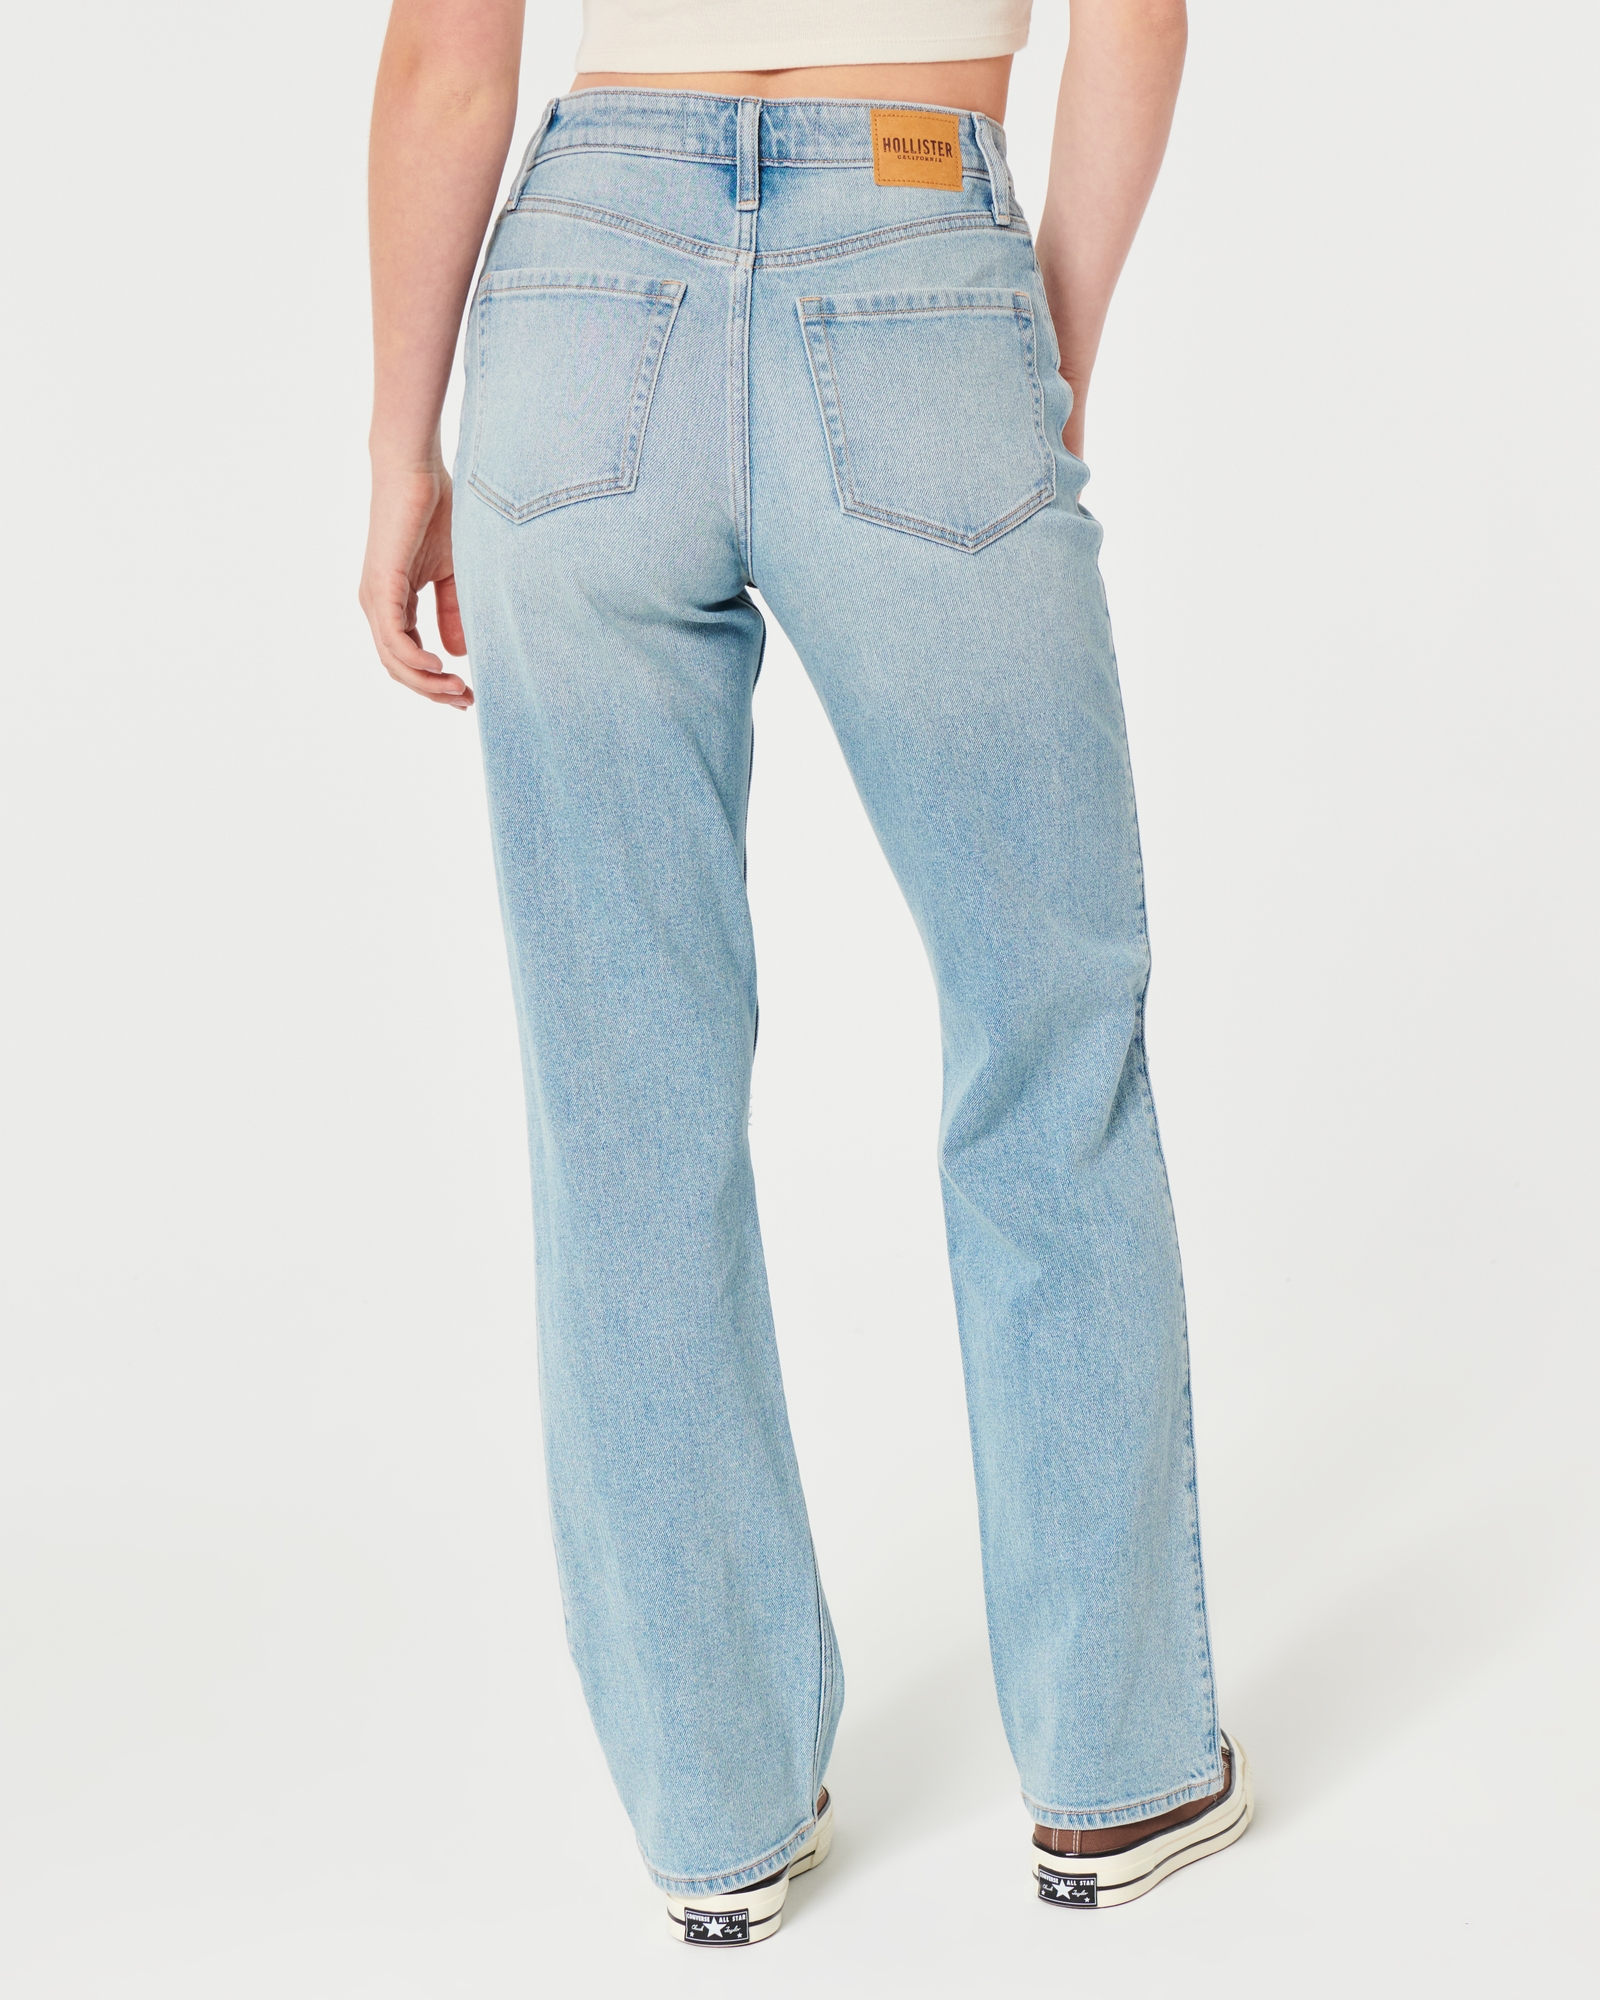 Hollister Low-Rise Jeggings Size 0 Light Wash Denim Jeans